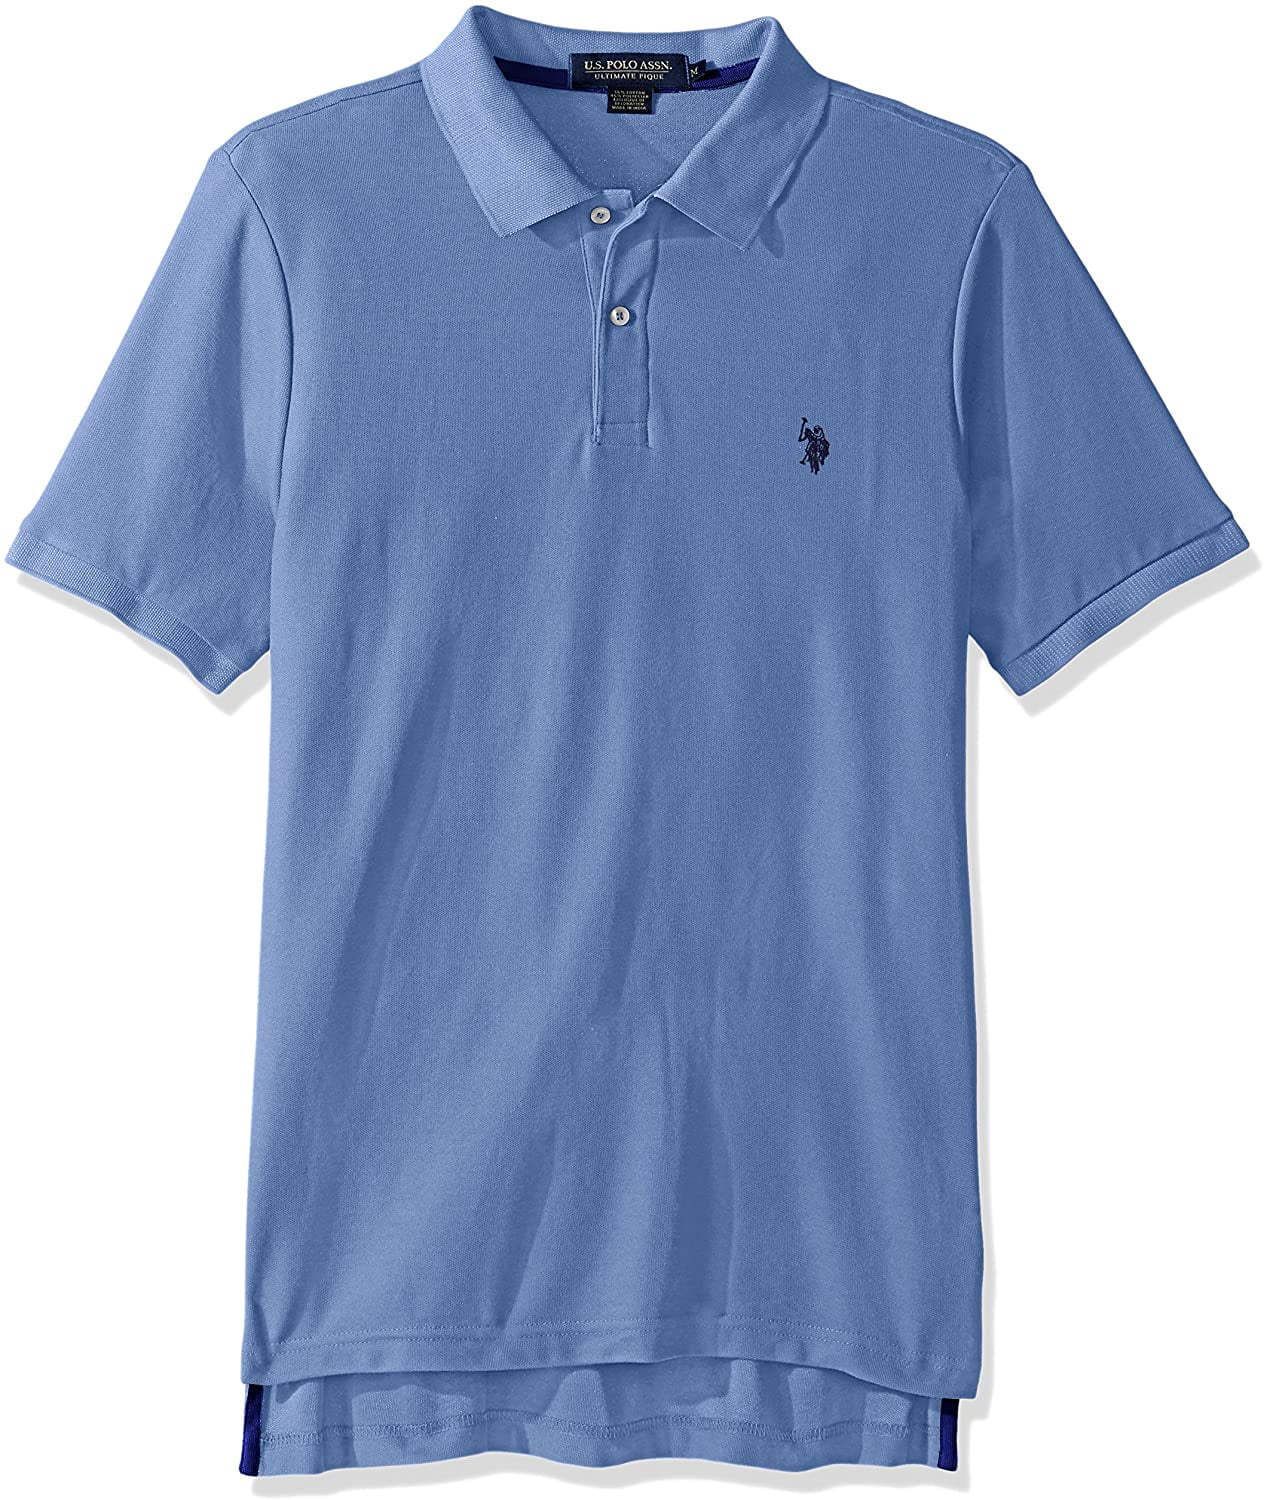 U.S Pick SZ/Color. Mens Short Sleeve Solid Slim Fit Pique Shirt Polo Assn 